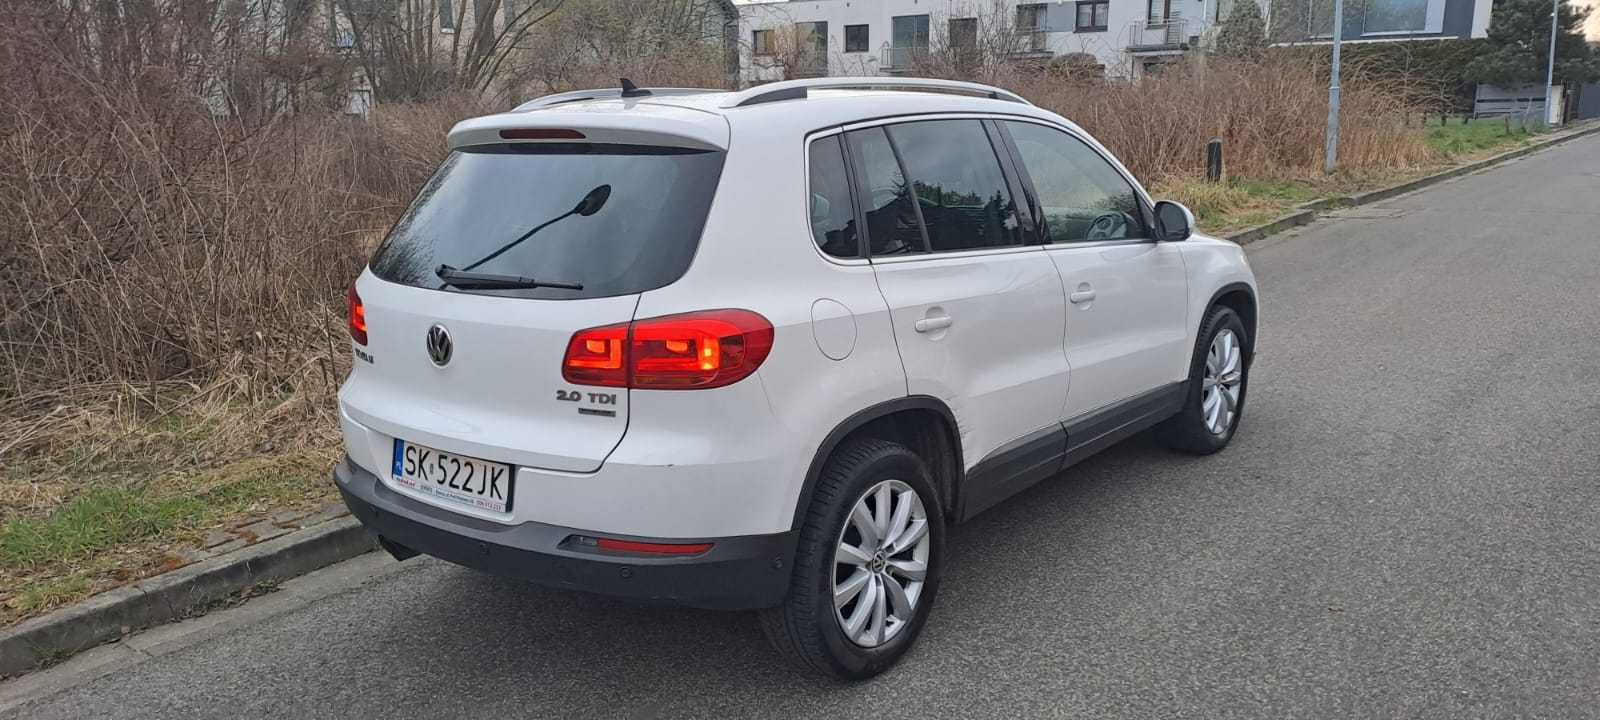 Volkswagen Tiguan Biała Perełka FULL WYPOSAŻENIE